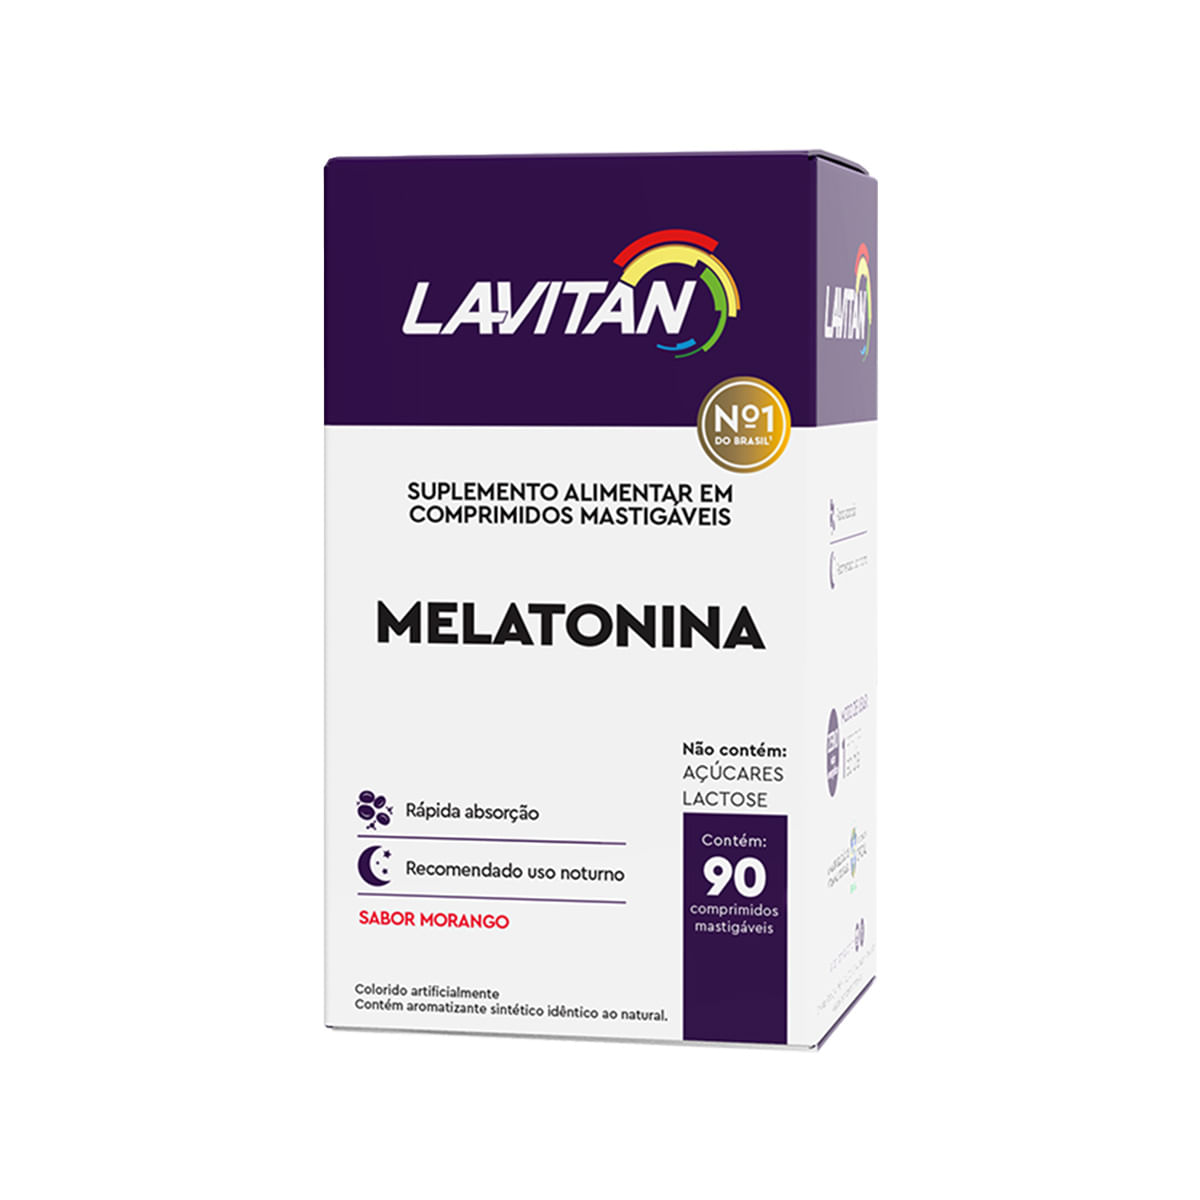 Lavitan Suplemento Alimentar Melatonina 90 Comprimidos Mastigáveis Sabor Morango CIMED